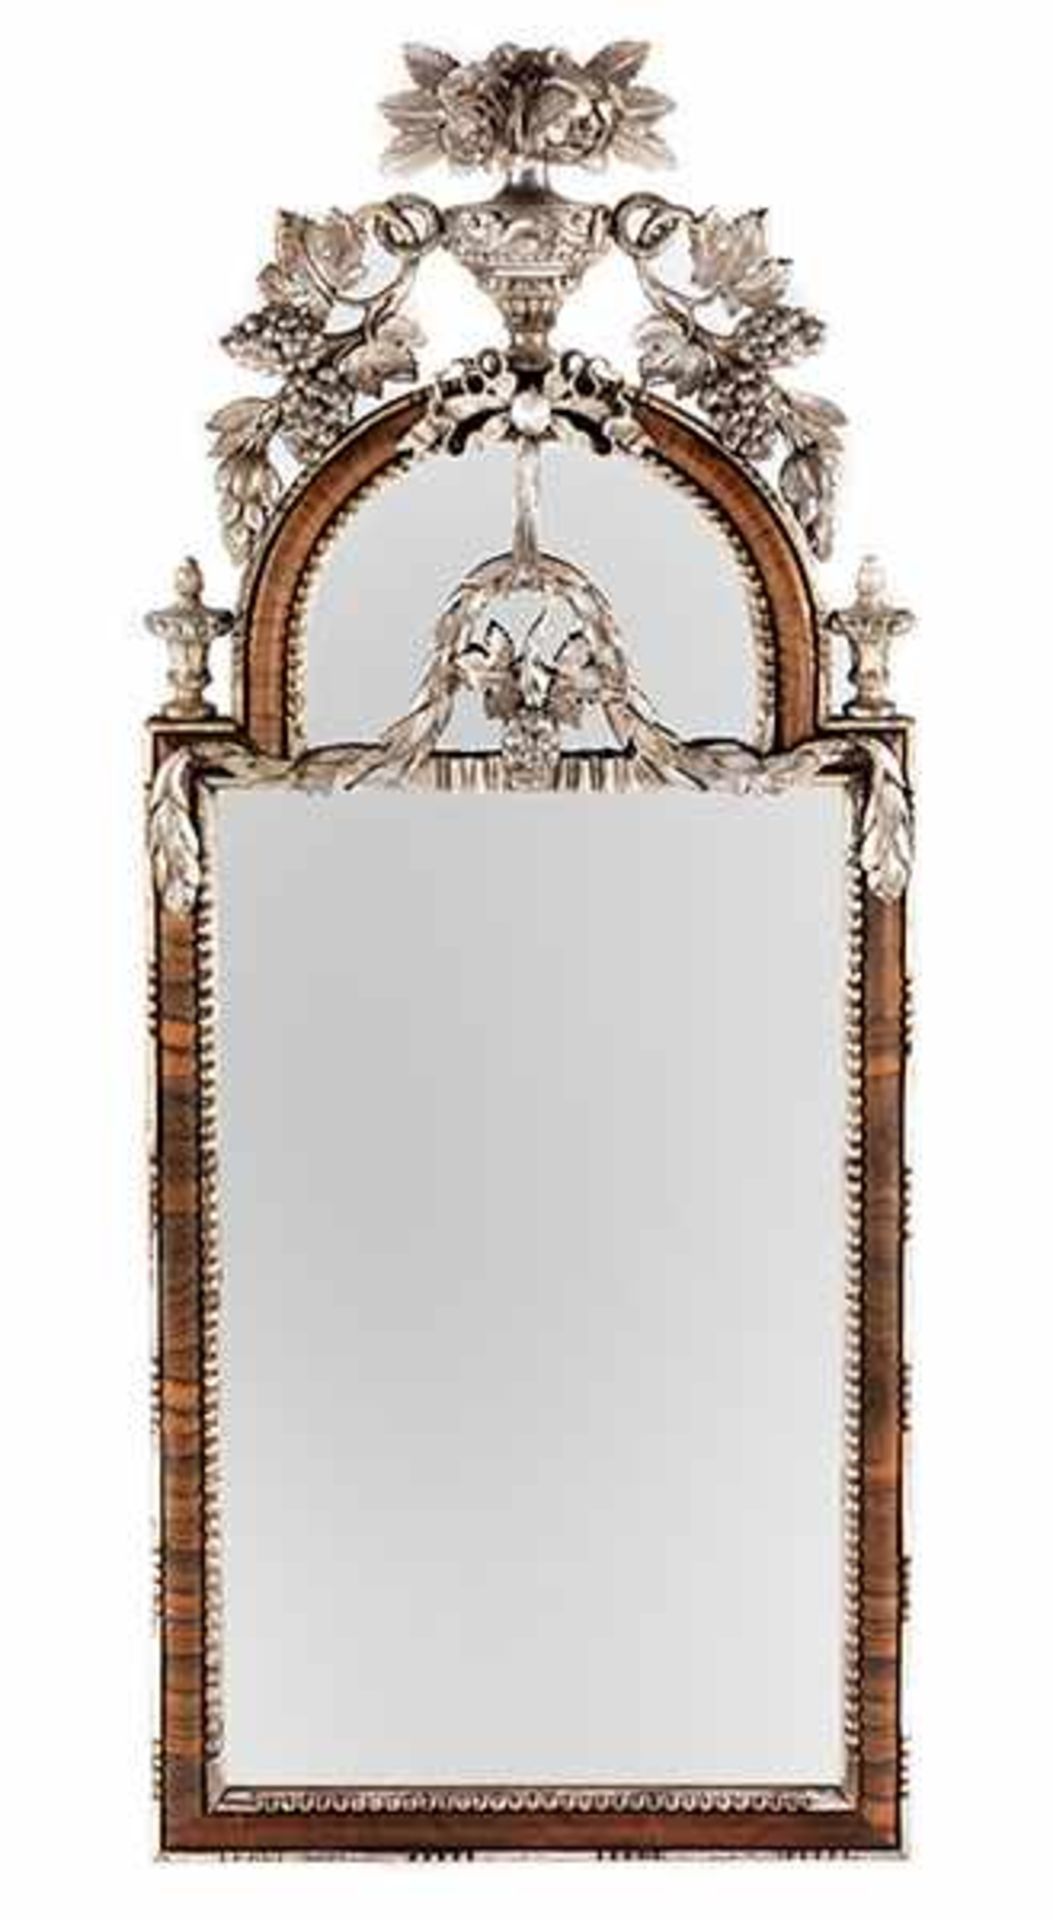 Altonaer Spiegel Höhe: 128 cm. Breite: 52,5 cm. Altona, um 1770/80. Weichholz, geschnitzt,